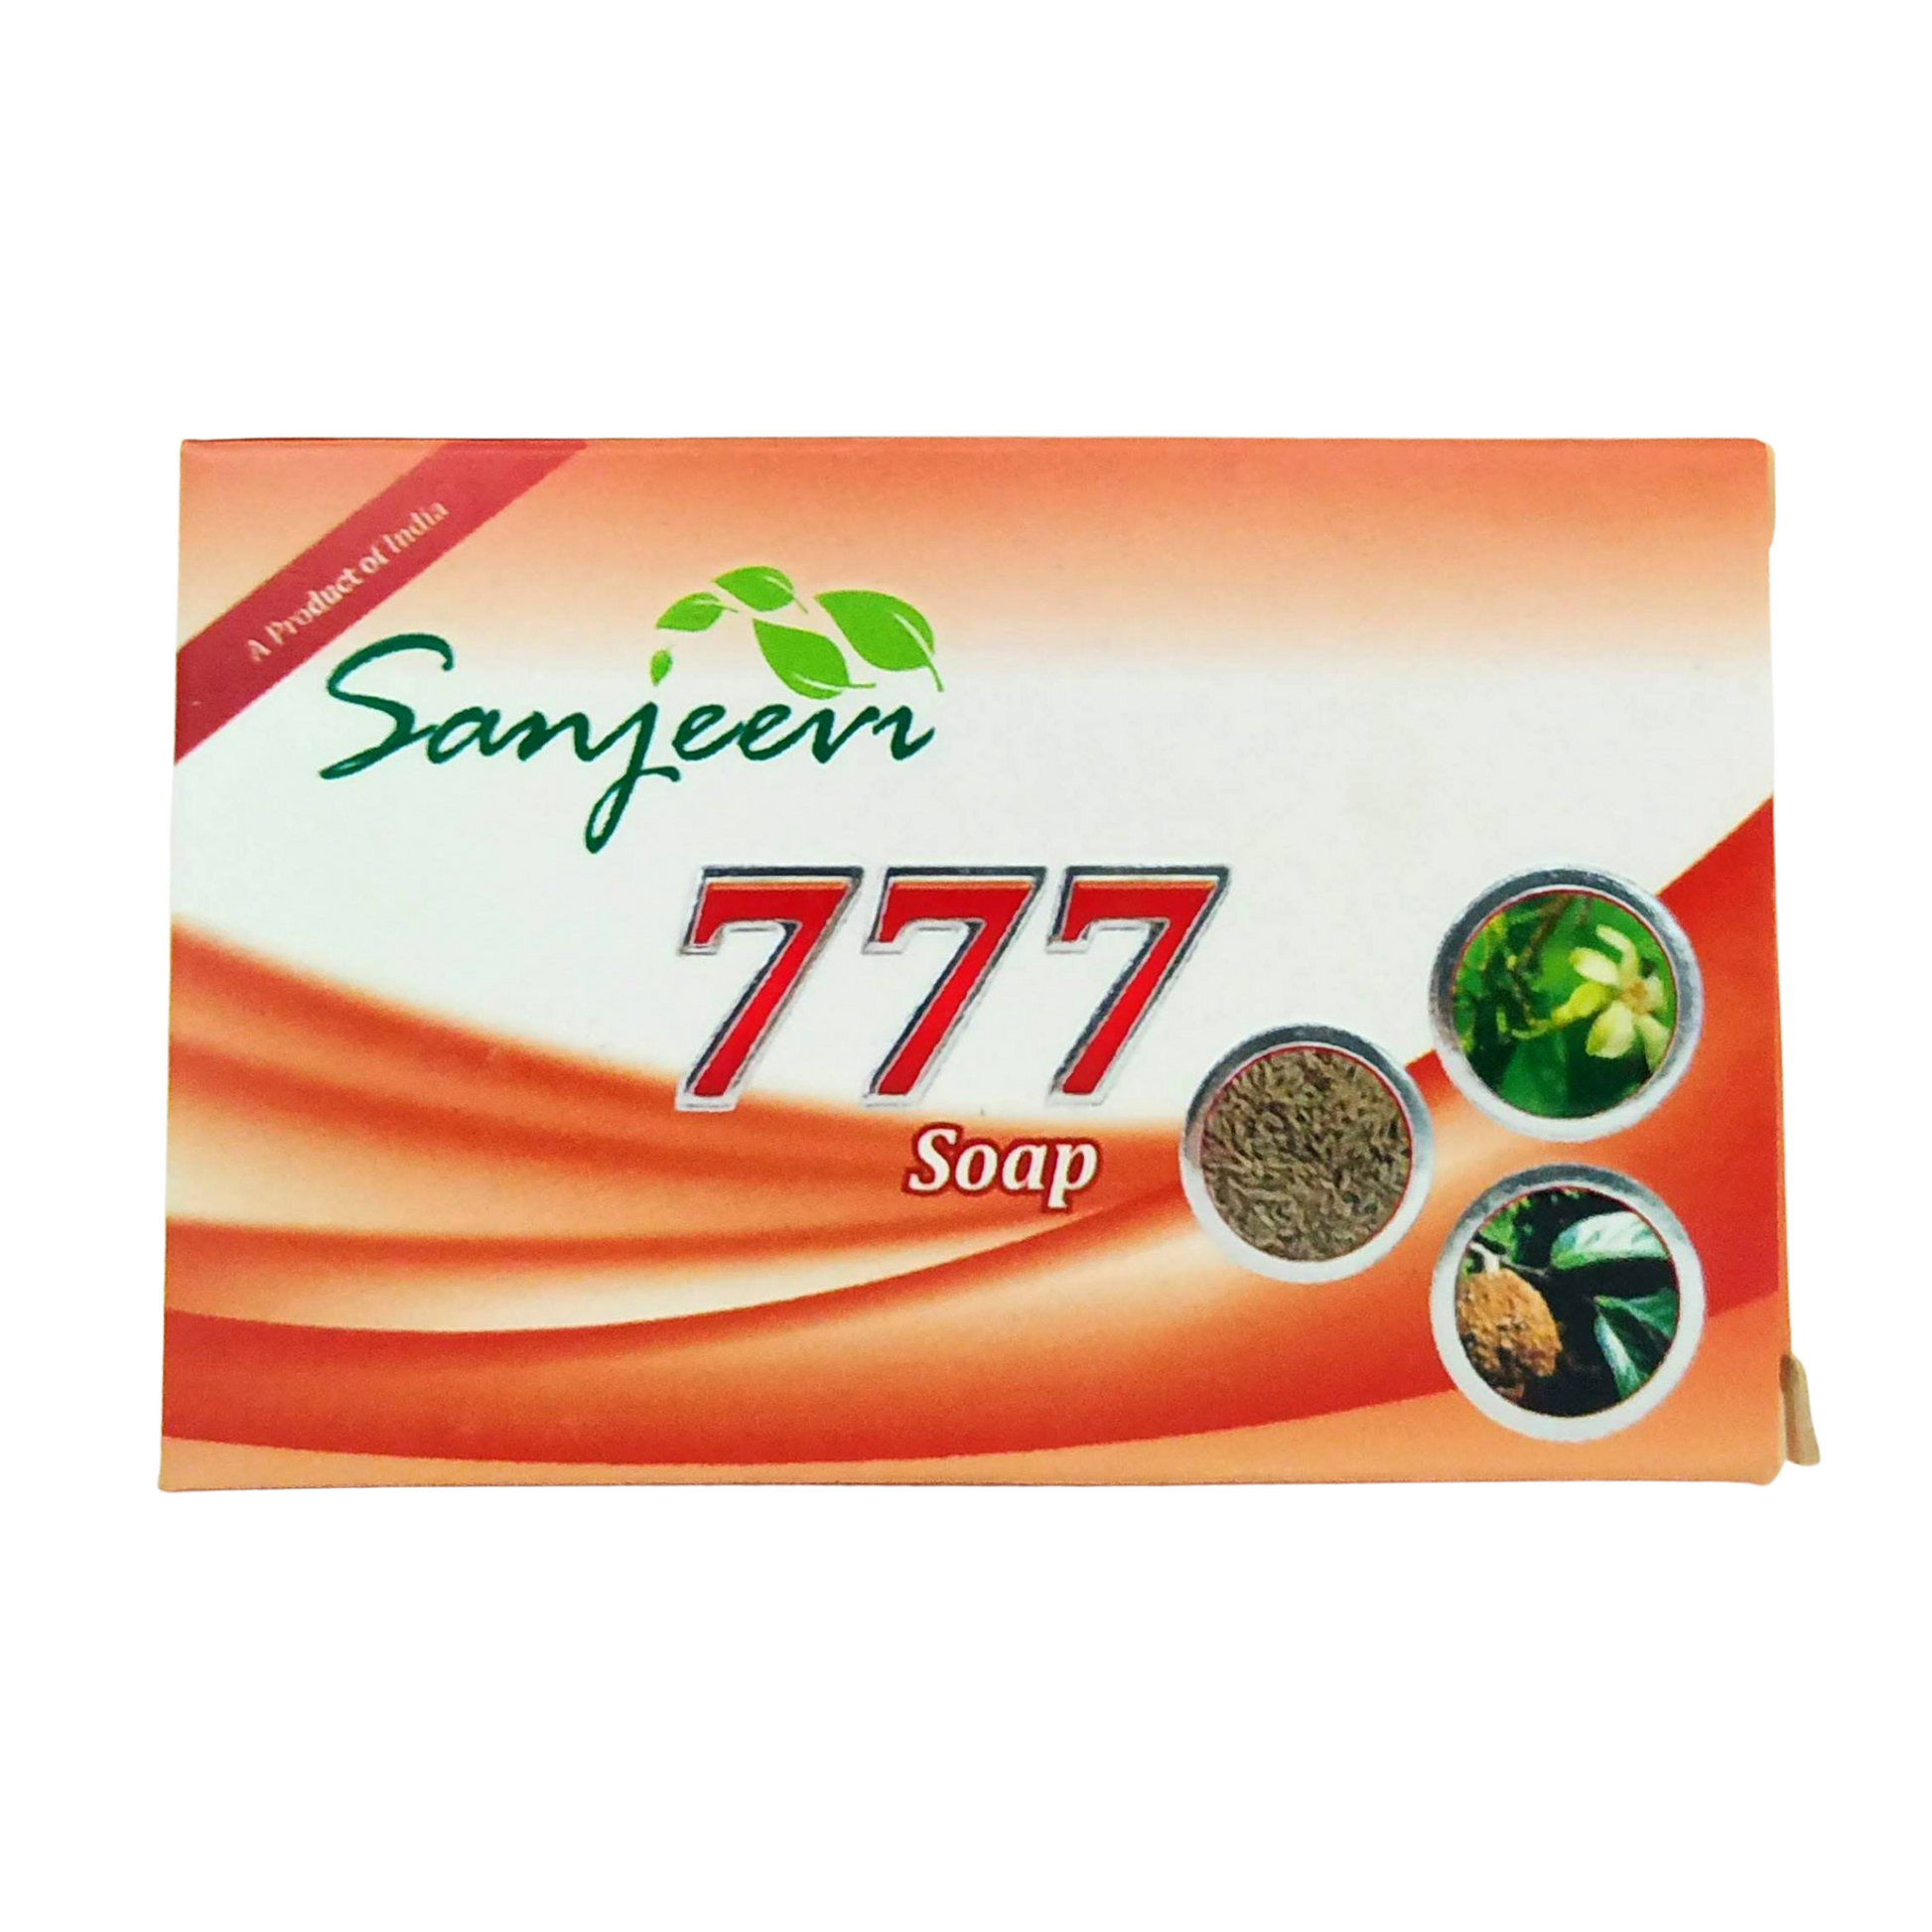 Sanjeevi 777 Soap 100gm -  Sanjeevi - Medizzo.com